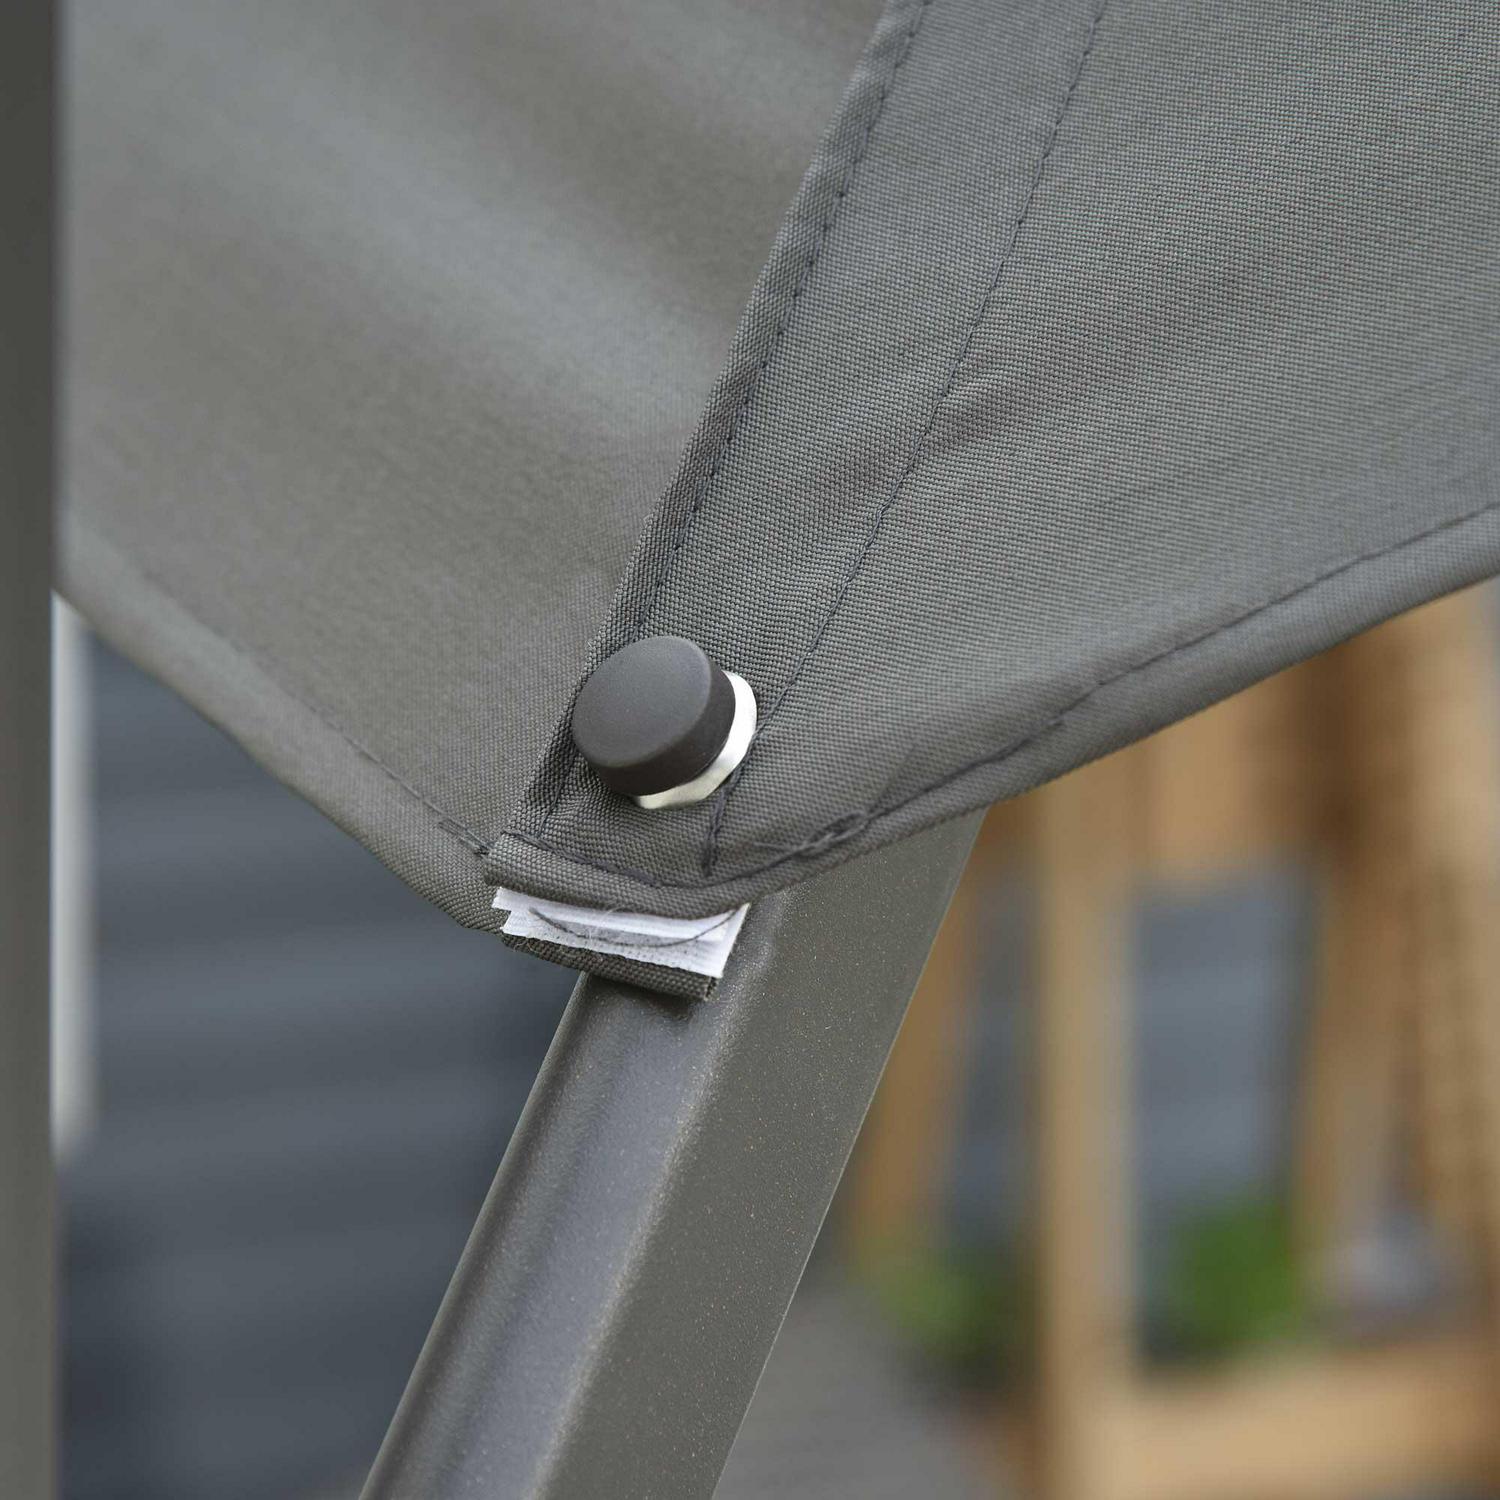 Offset Parasol Cantilever Hanging Umbrella 360° Rotation W/ Base Dark Grey